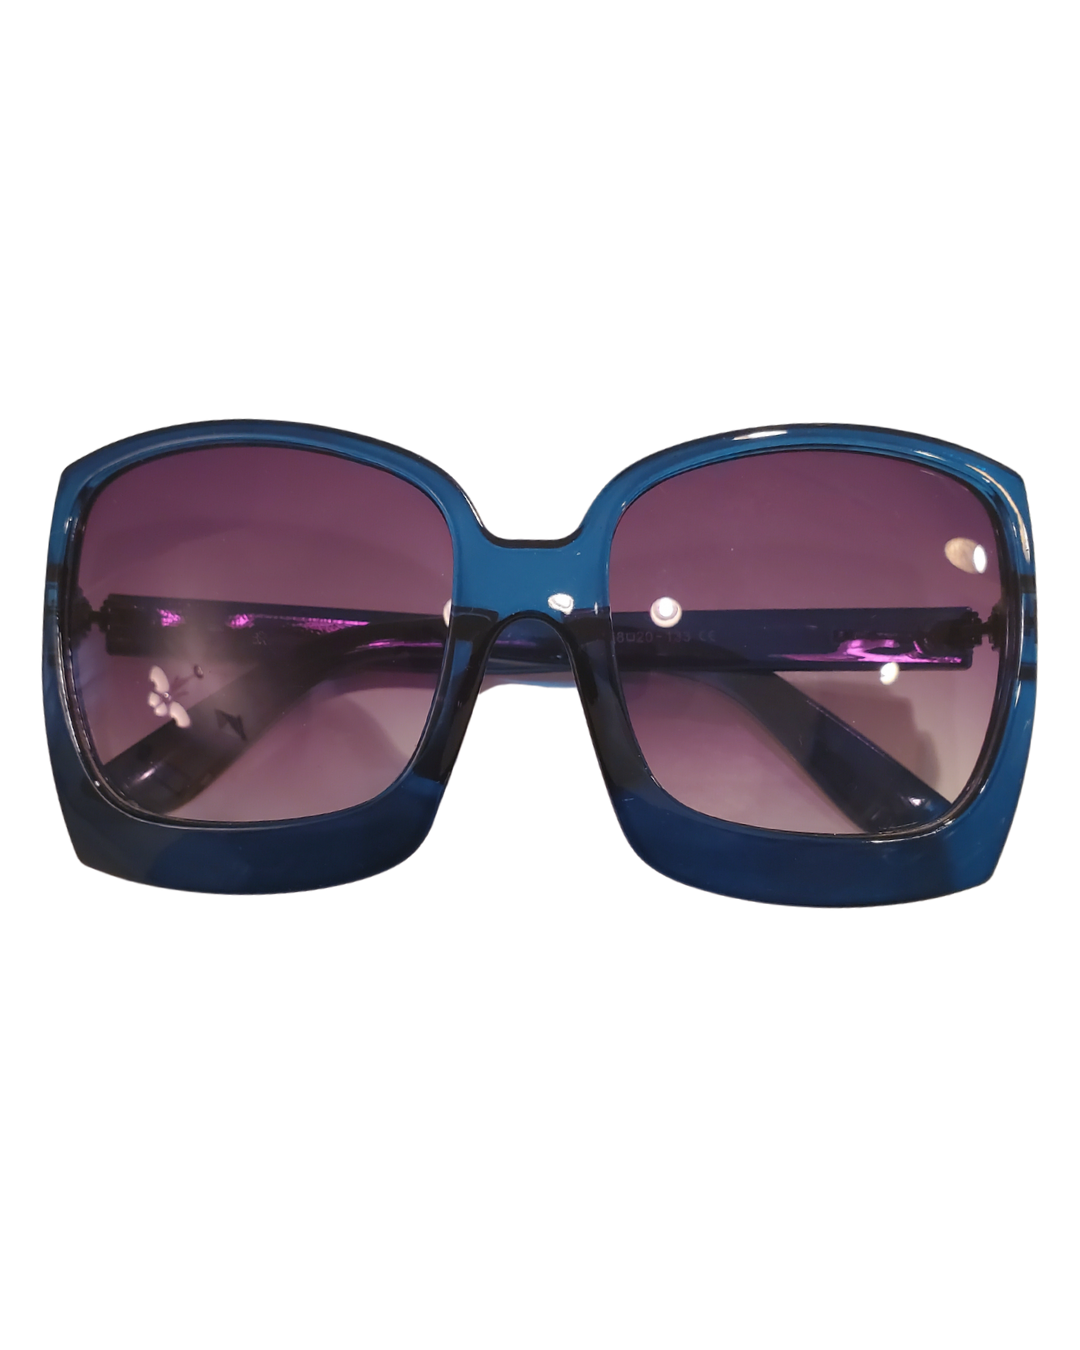 image of blue sunglasses. 